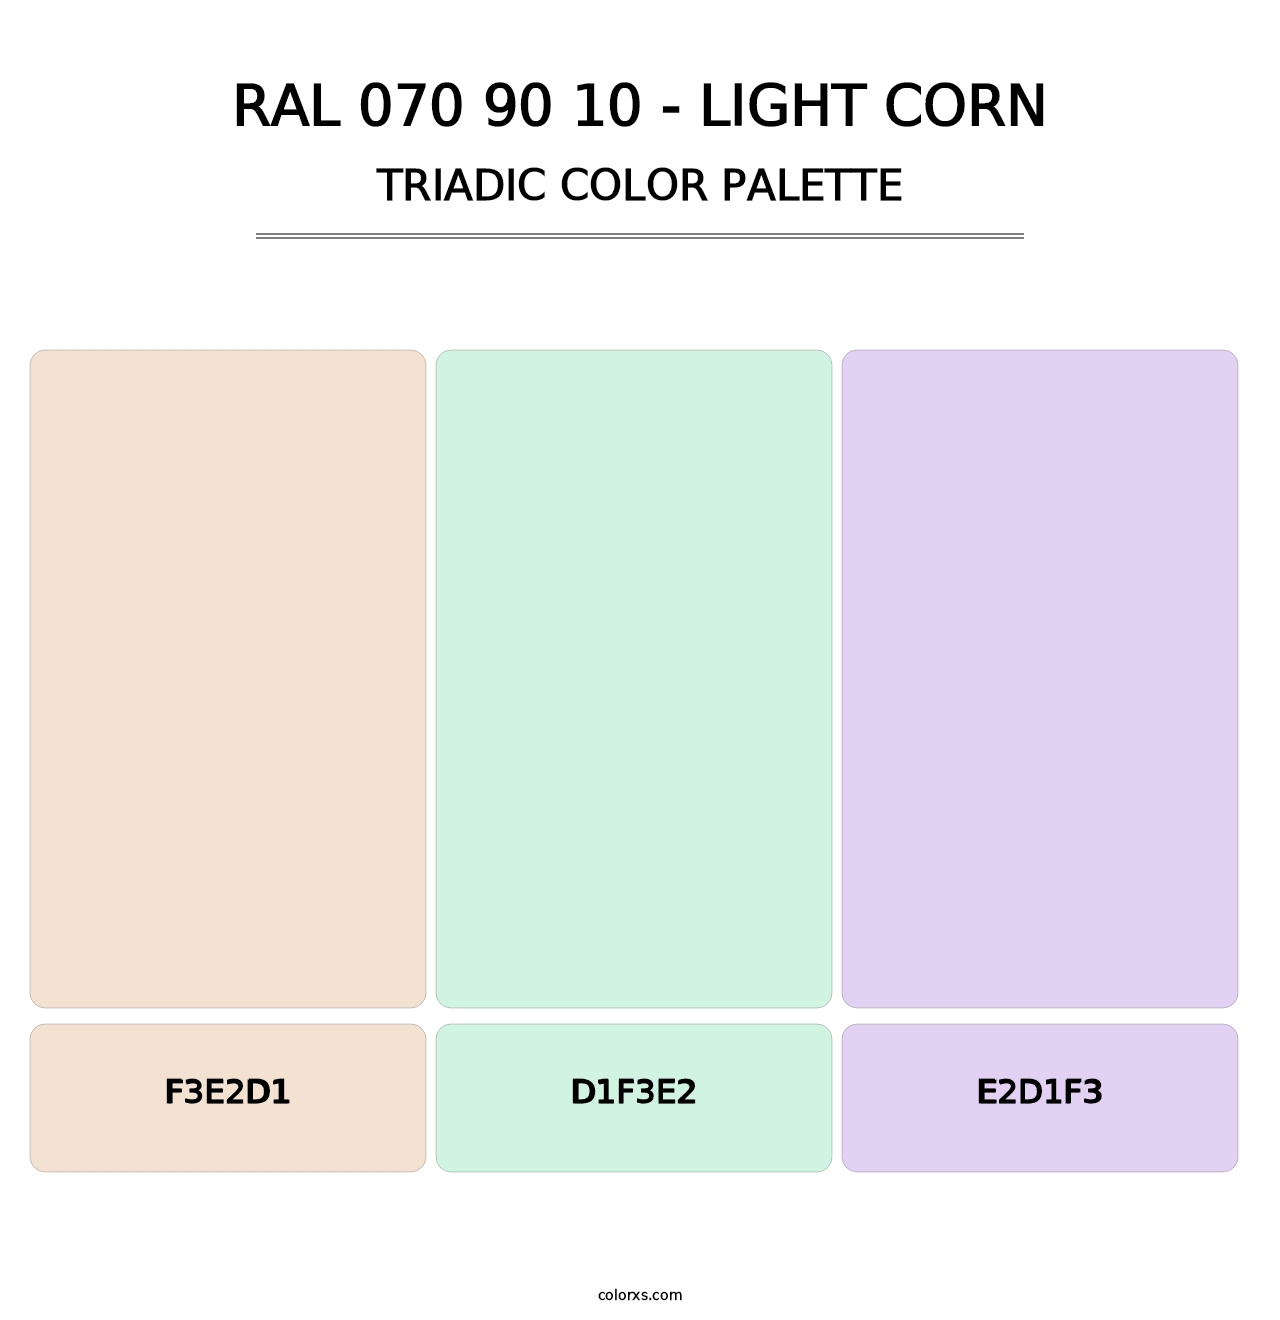 RAL 070 90 10 - Light Corn - Triadic Color Palette